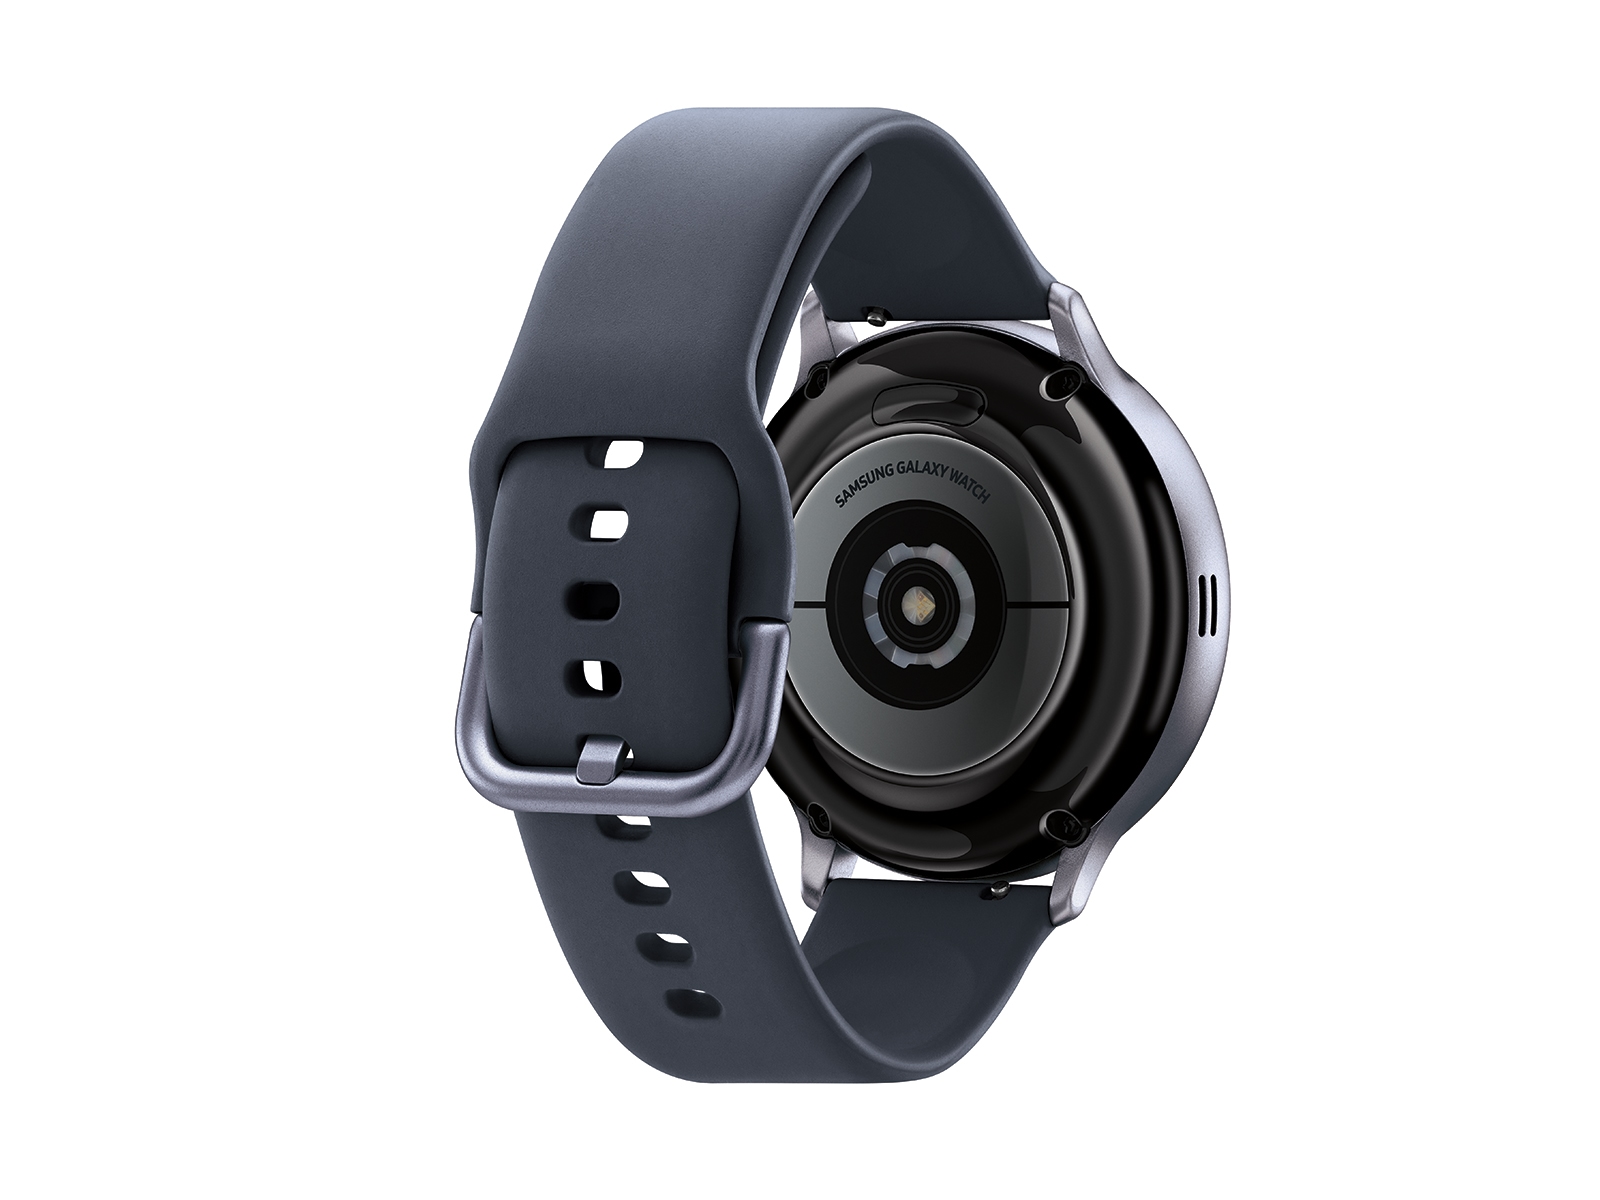 Thumbnail image of Galaxy Watch Active2 (44mm), Aqua Black (Bluetooth)